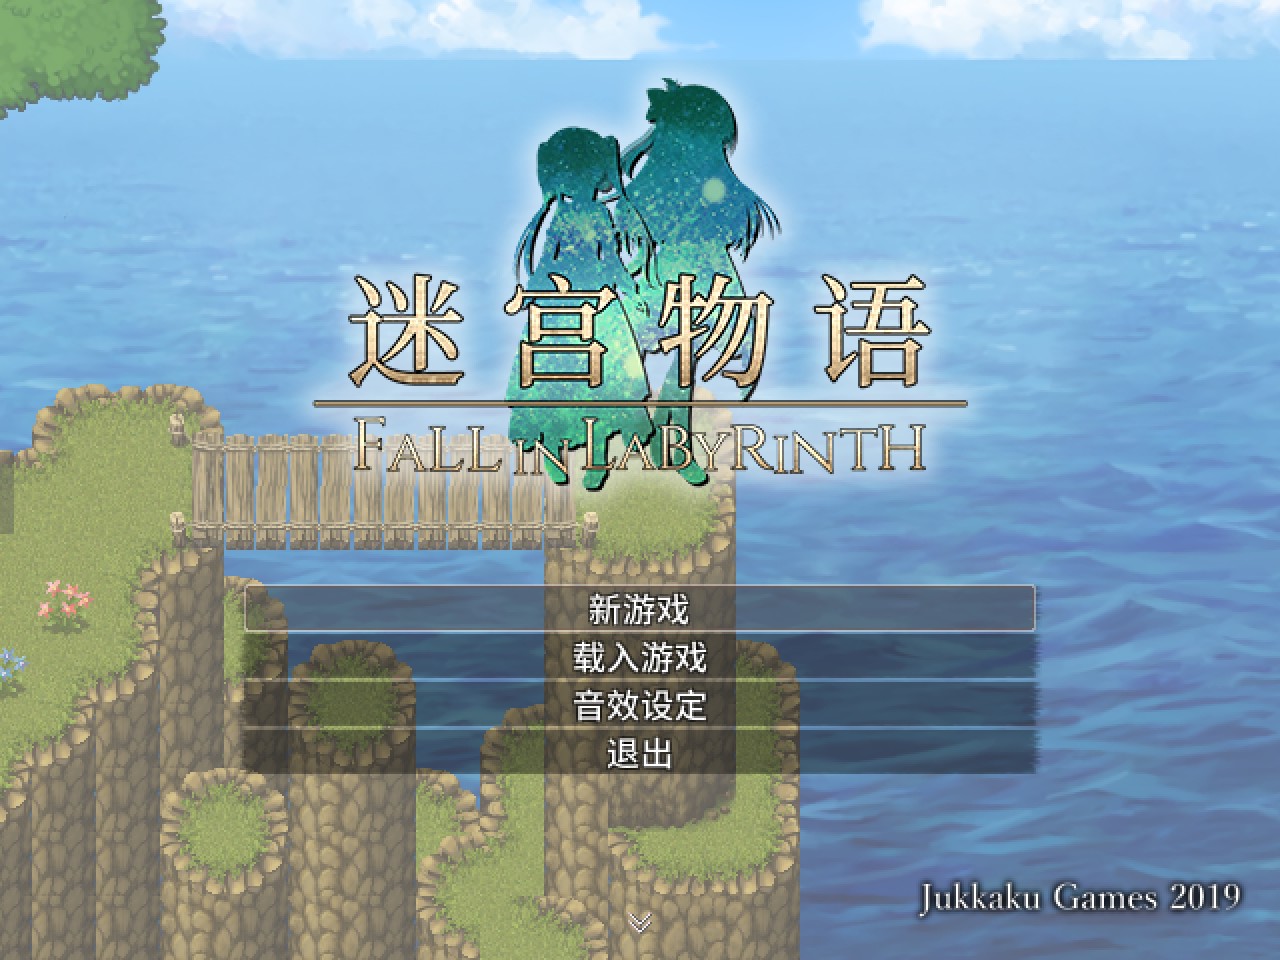 【RPG/官中】迷宫物语 - FALL IN LABYRINTH steam官中版【1.95G】-acgknow